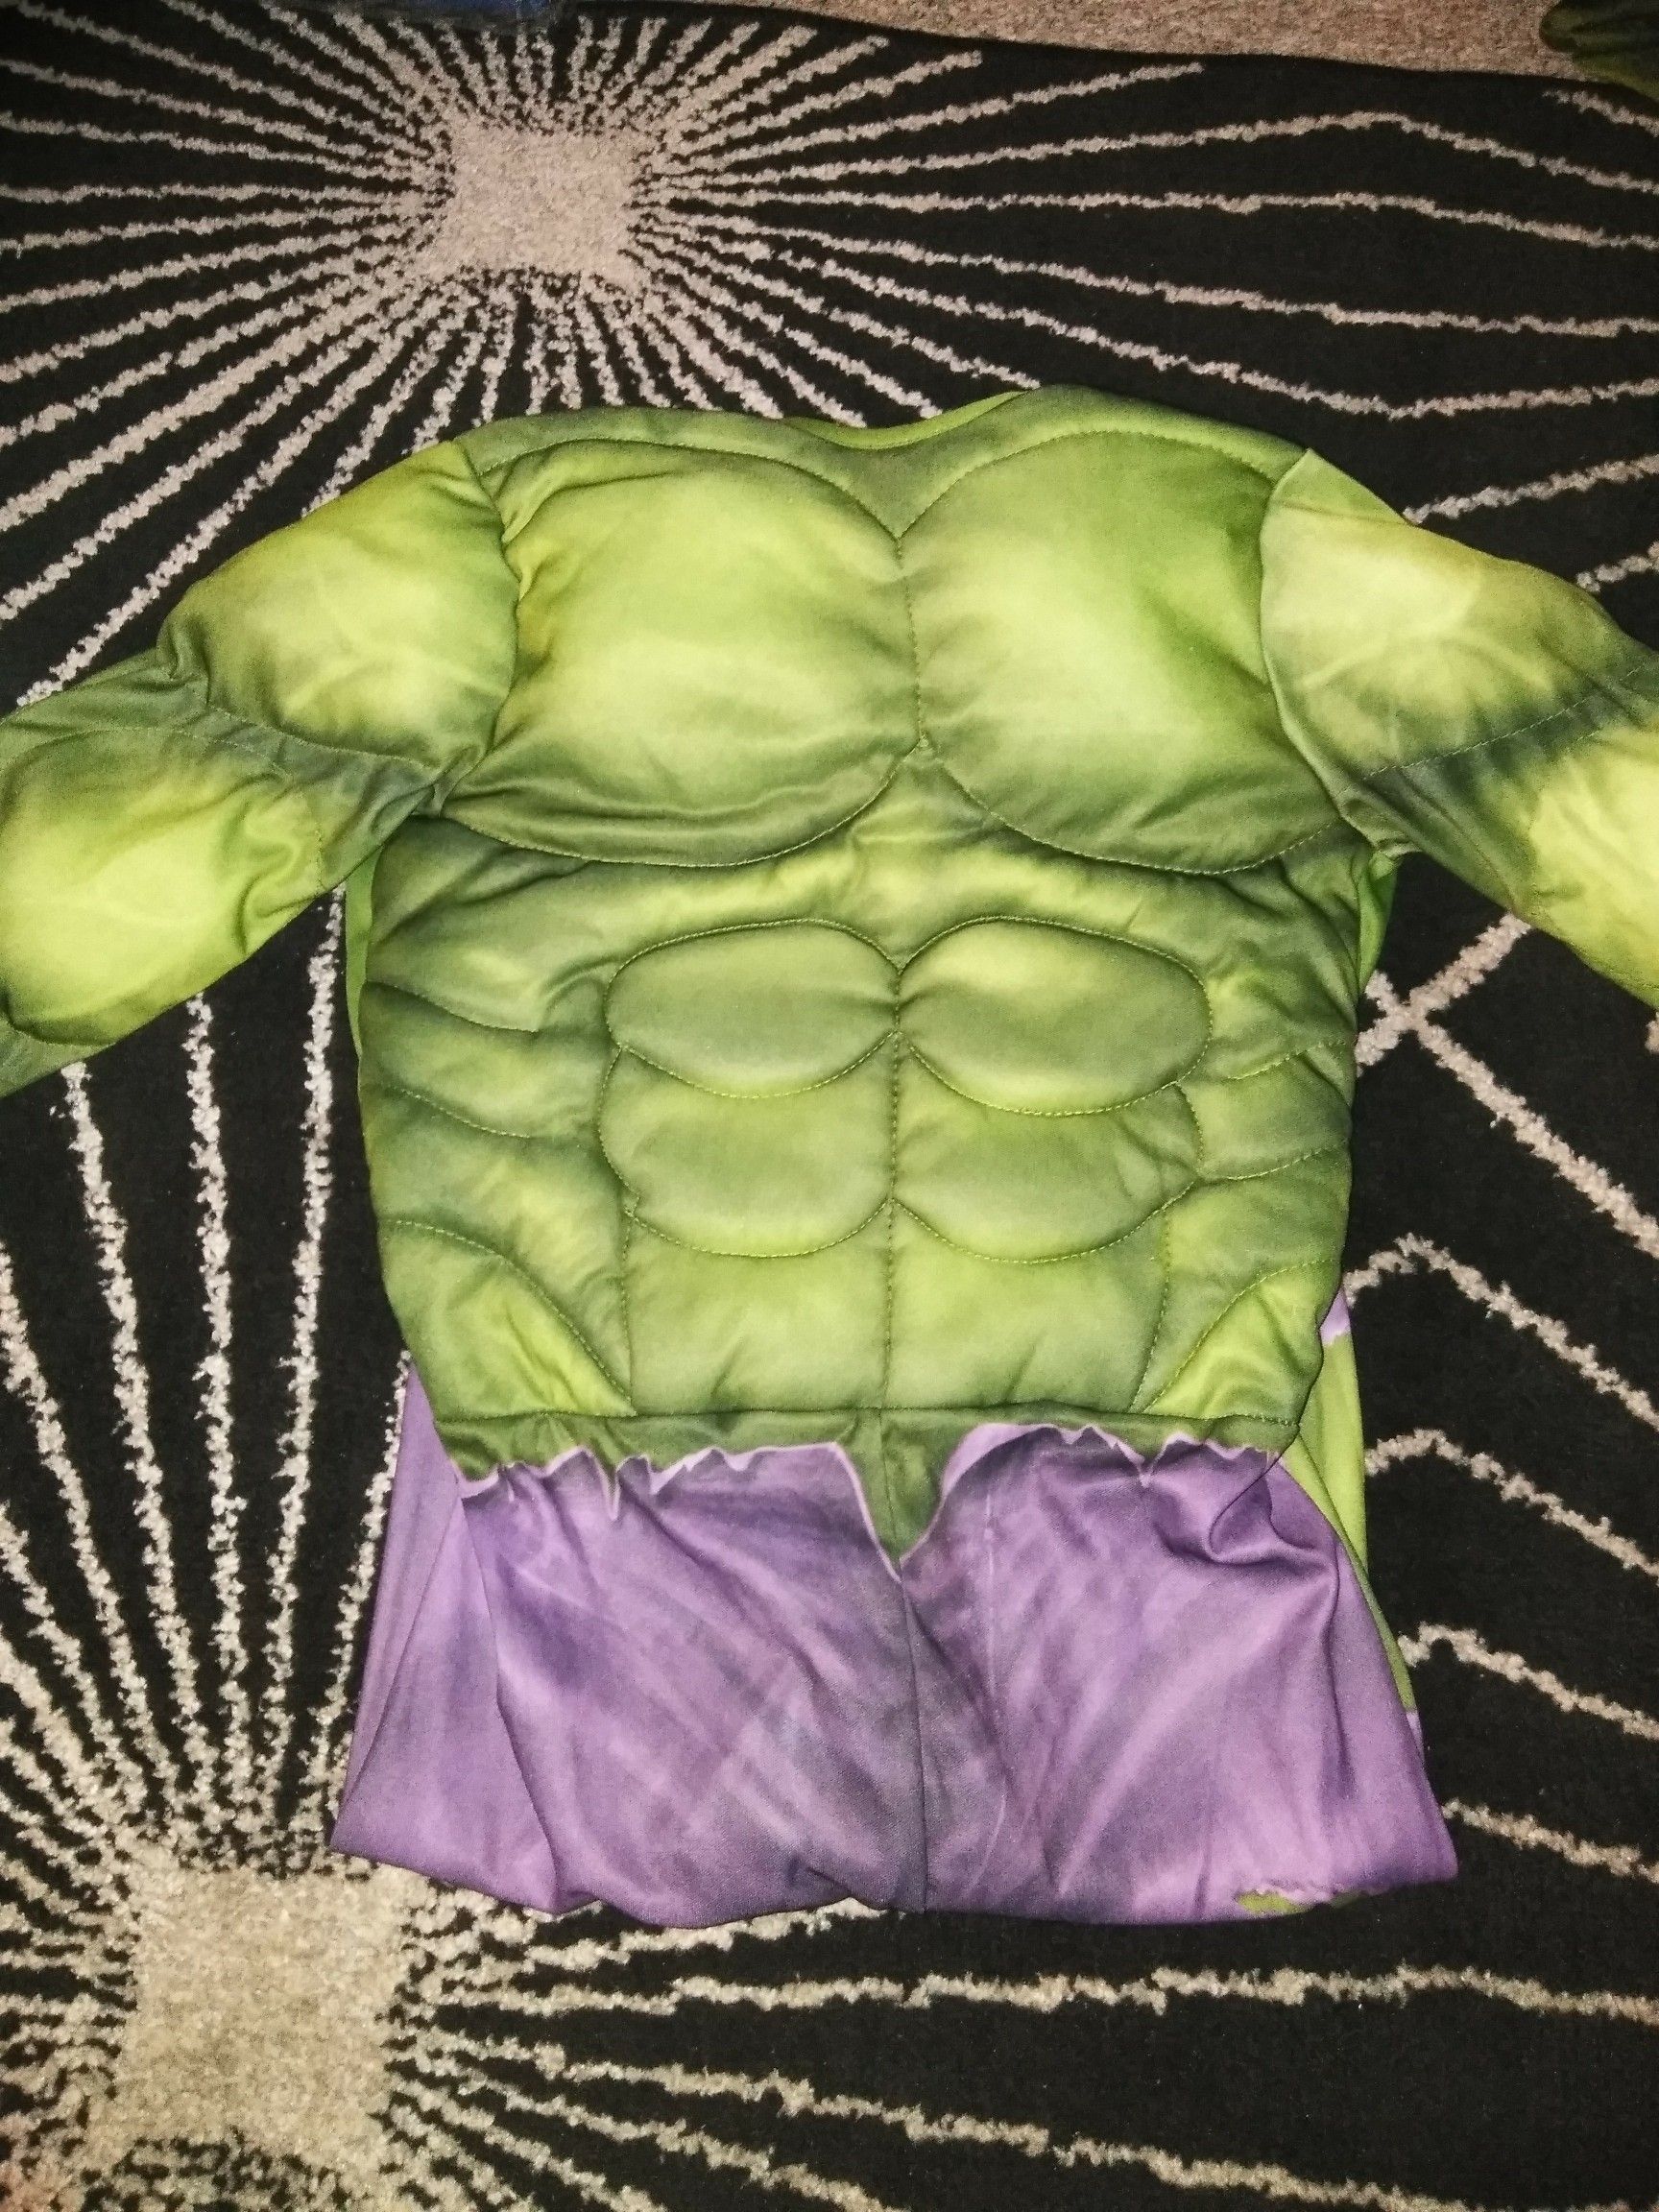 Hulk costume